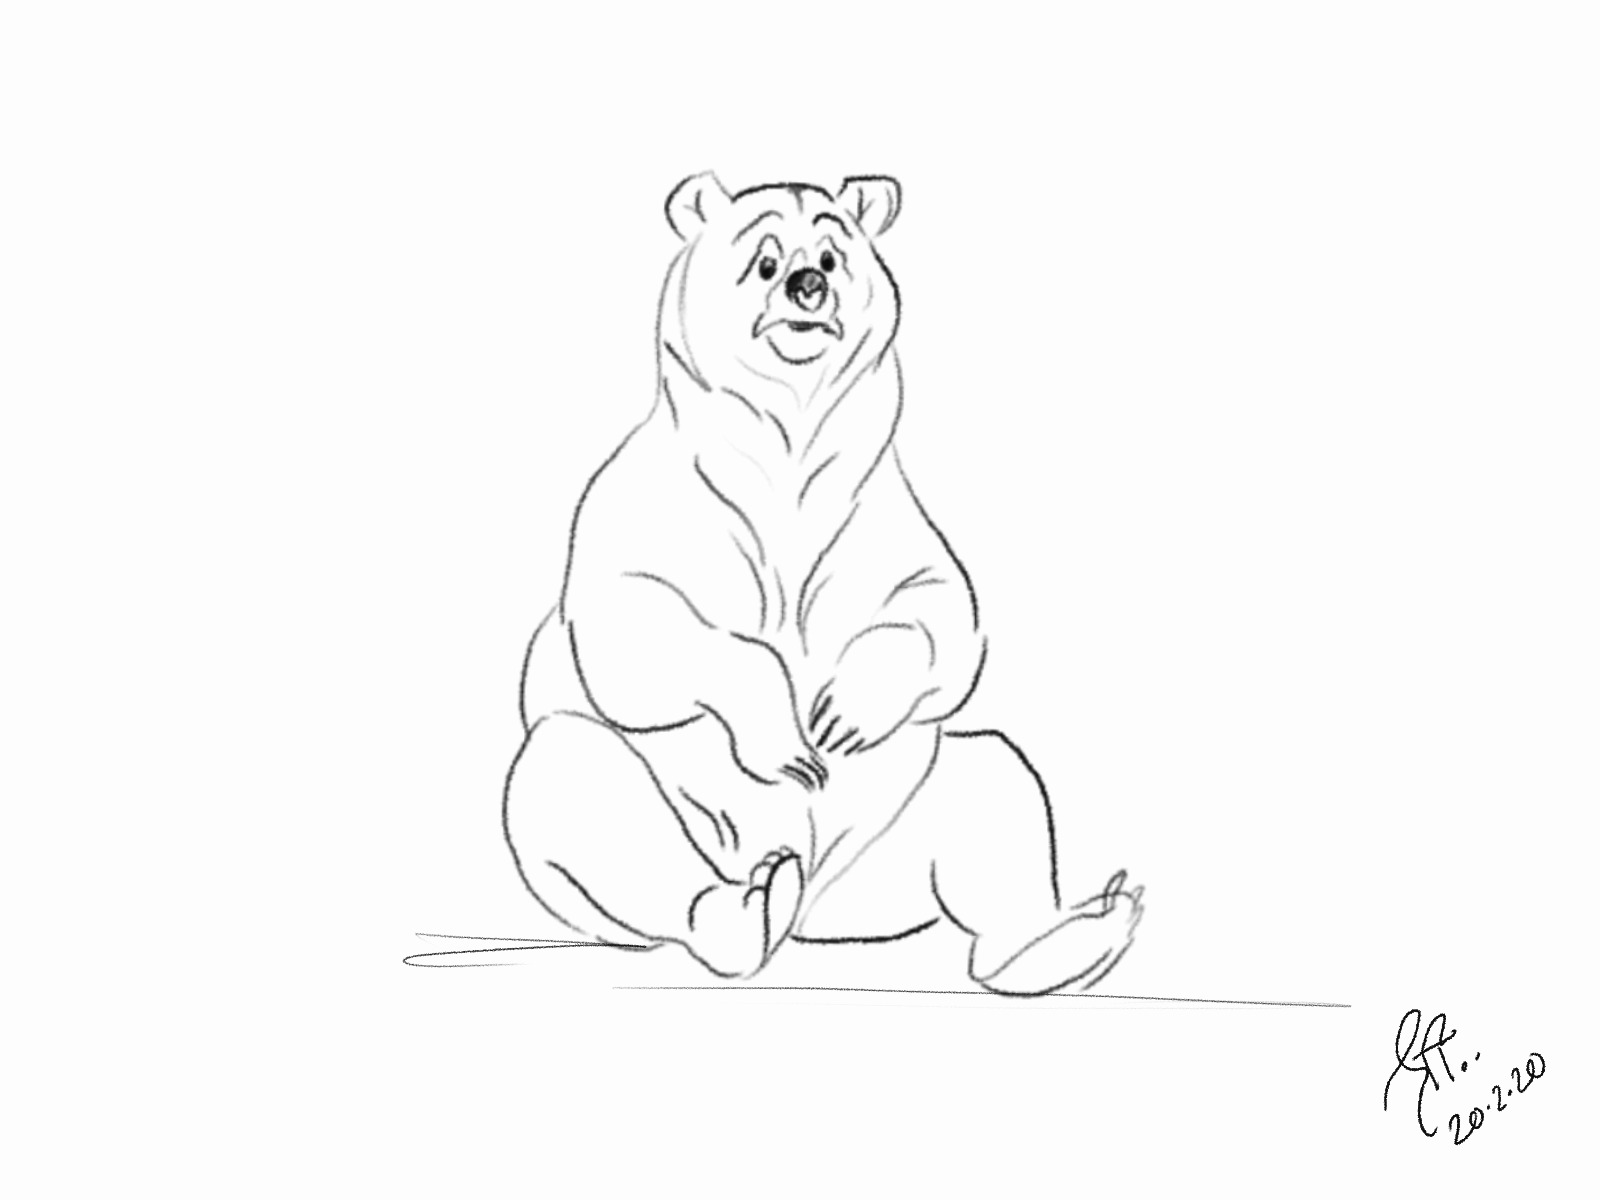 Yawning Bear 2020 2danimation illustration procreate quick sketch